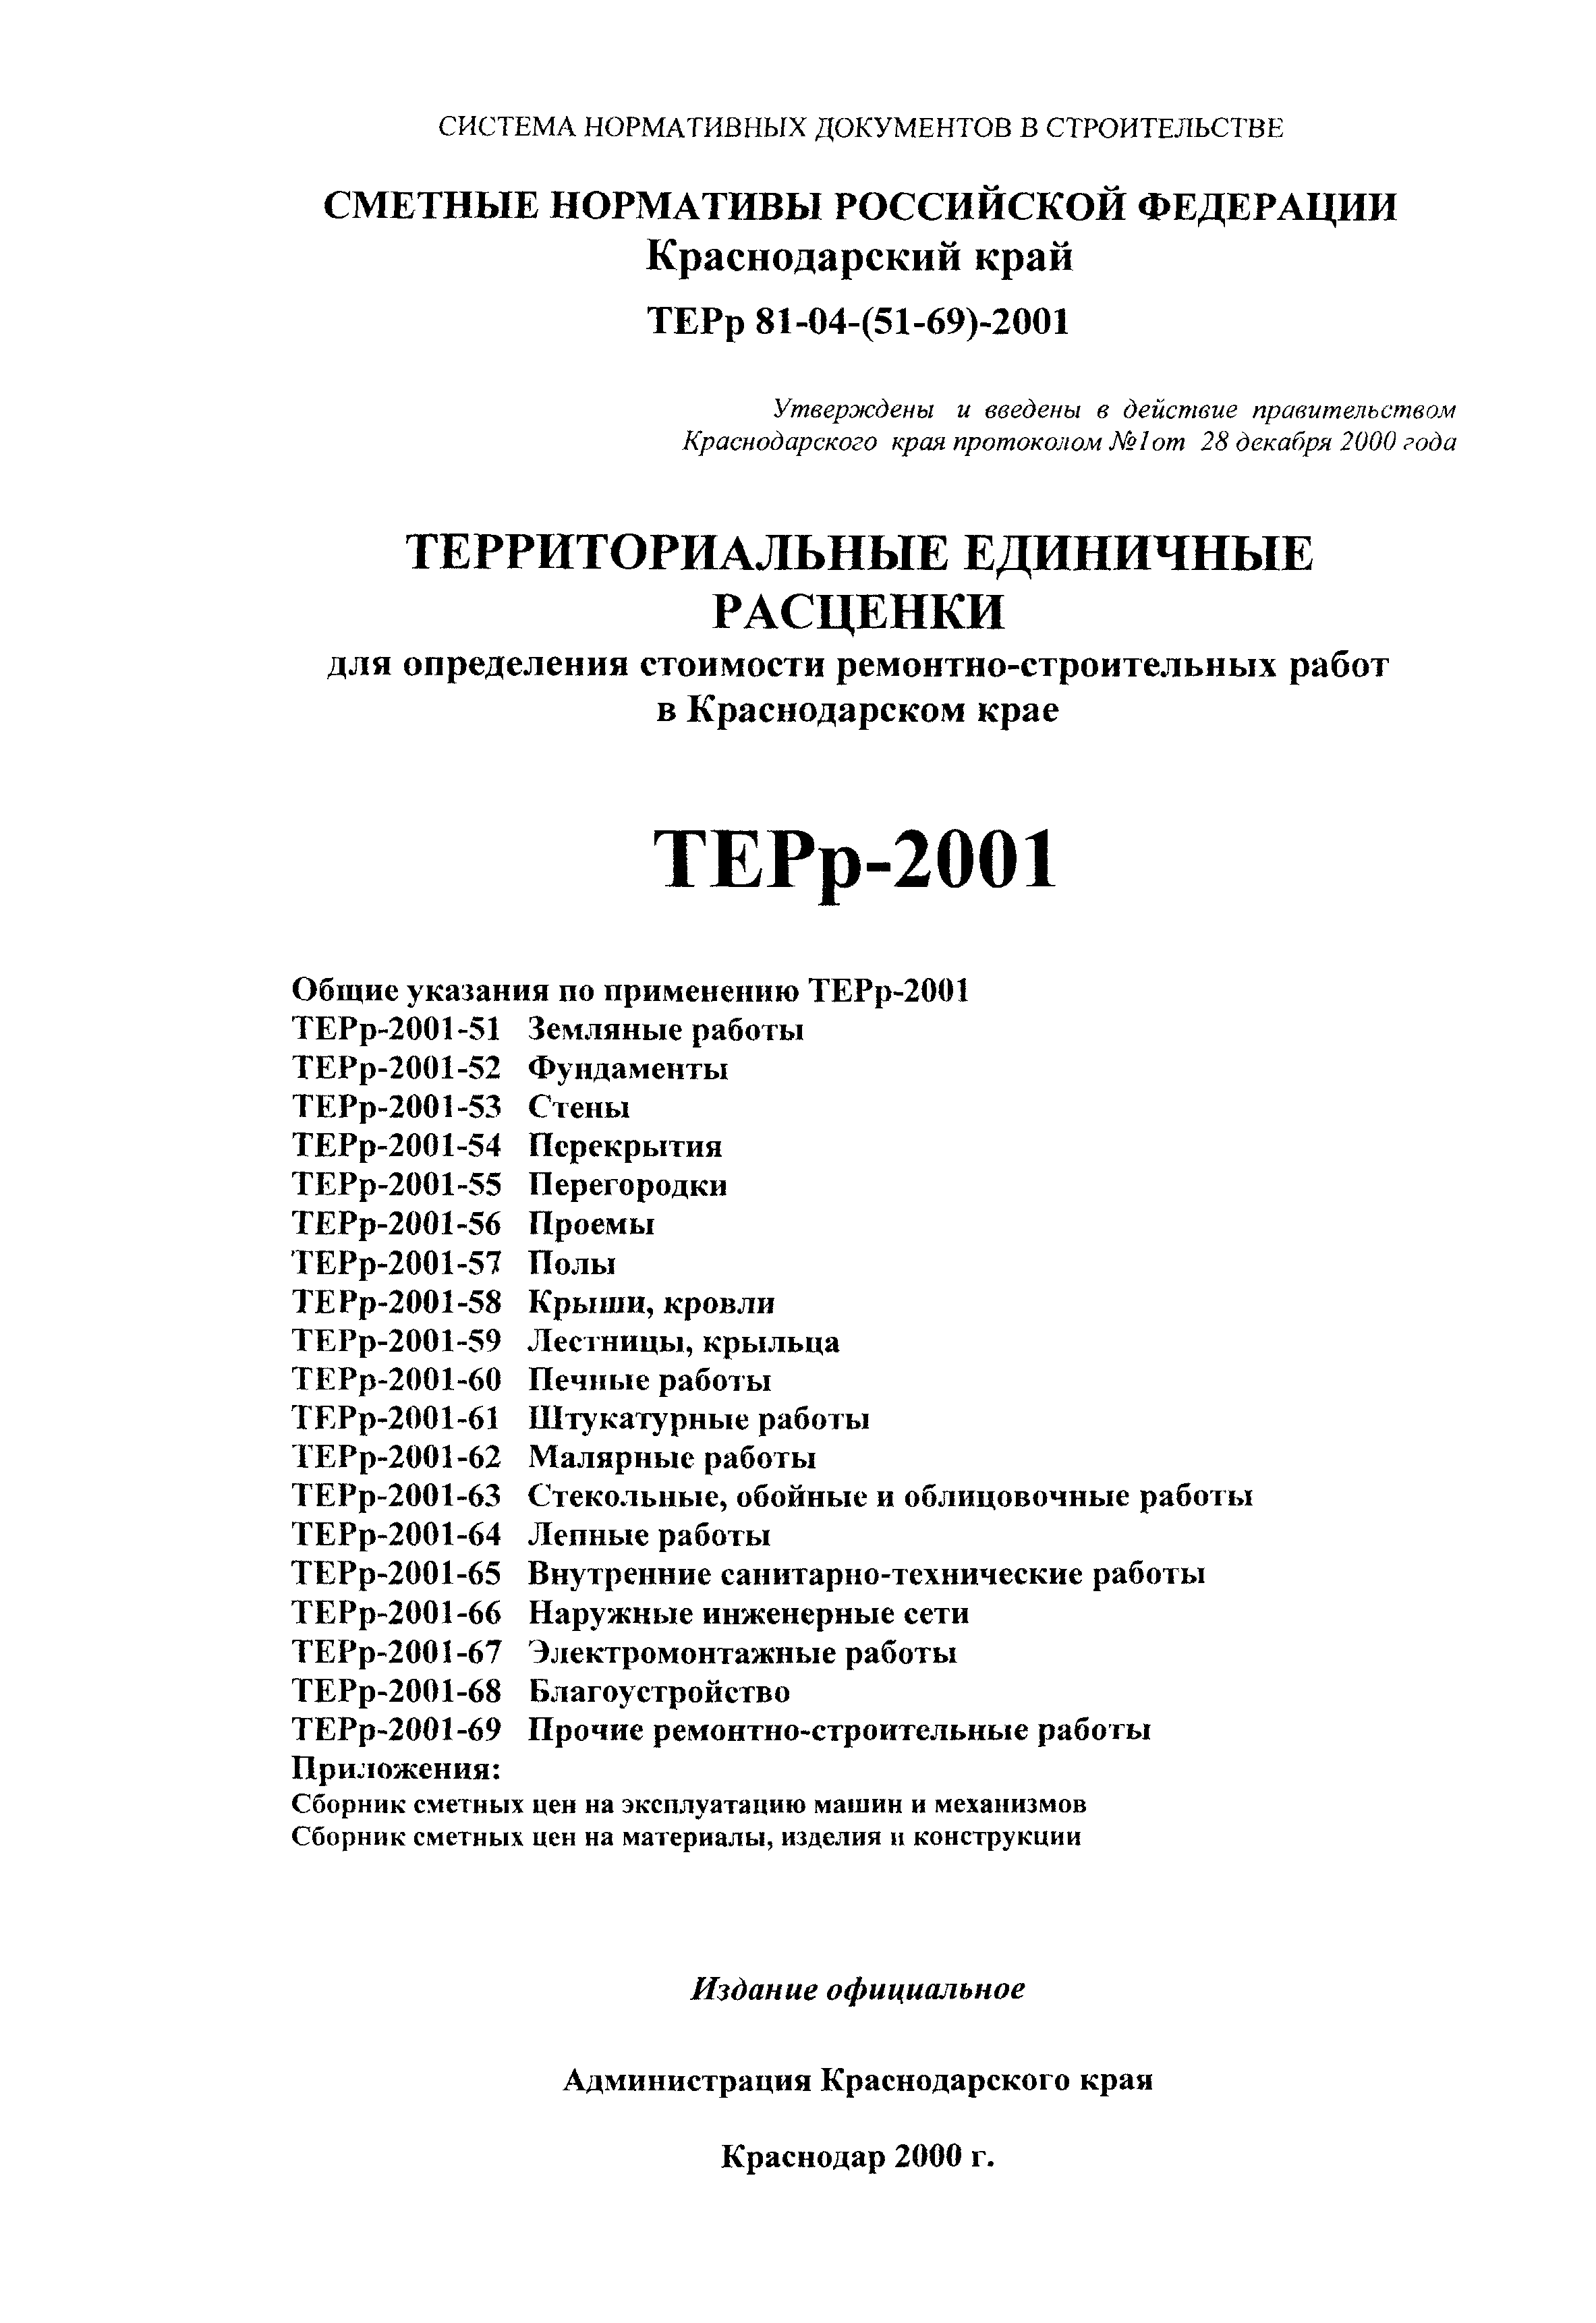 ТЕРр Краснодарский край 2001-56